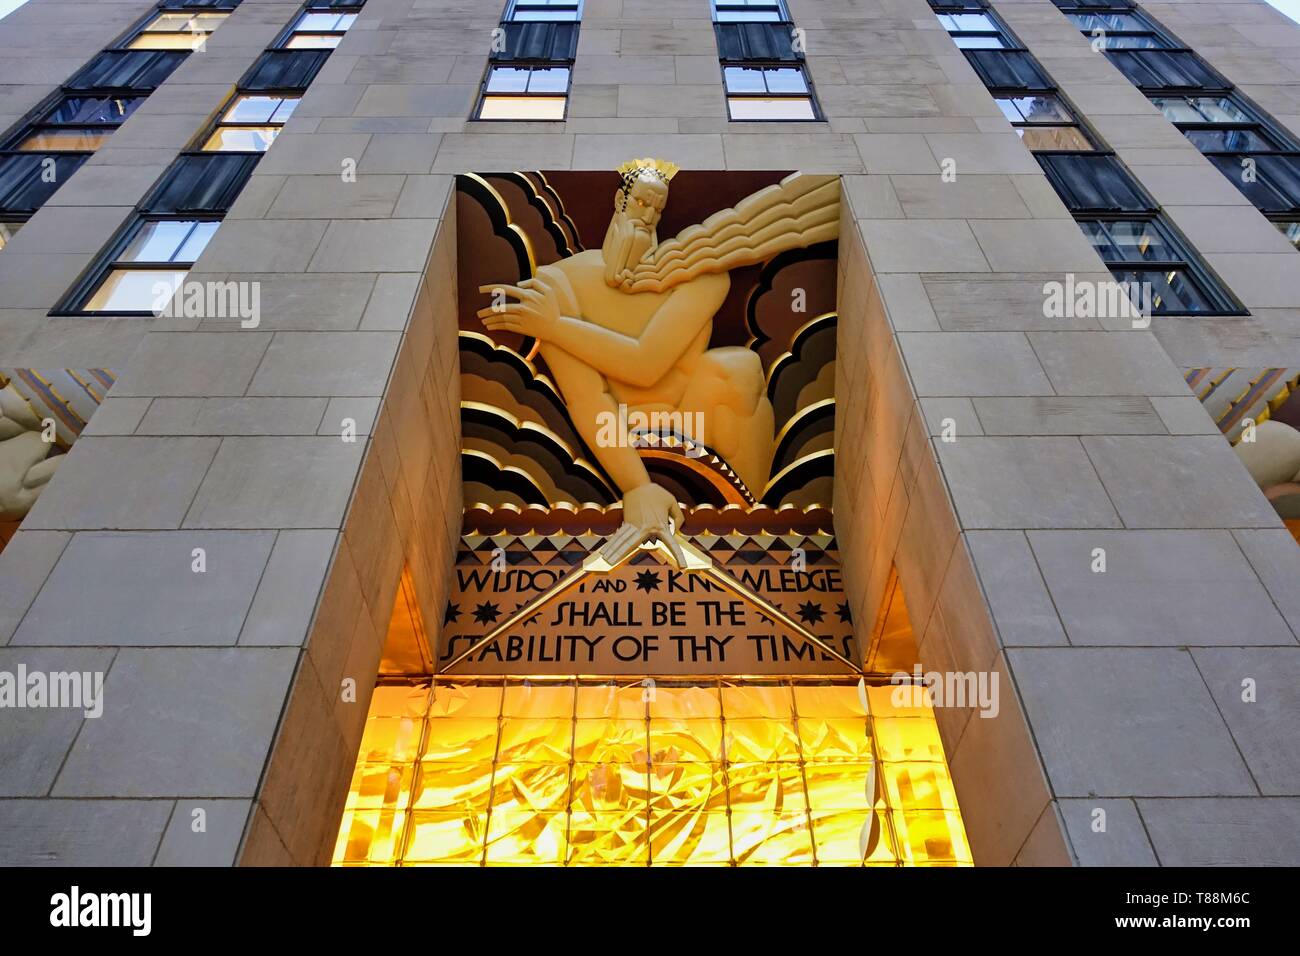 30 Rockefeller Plaza - Wisdom Stock Photo